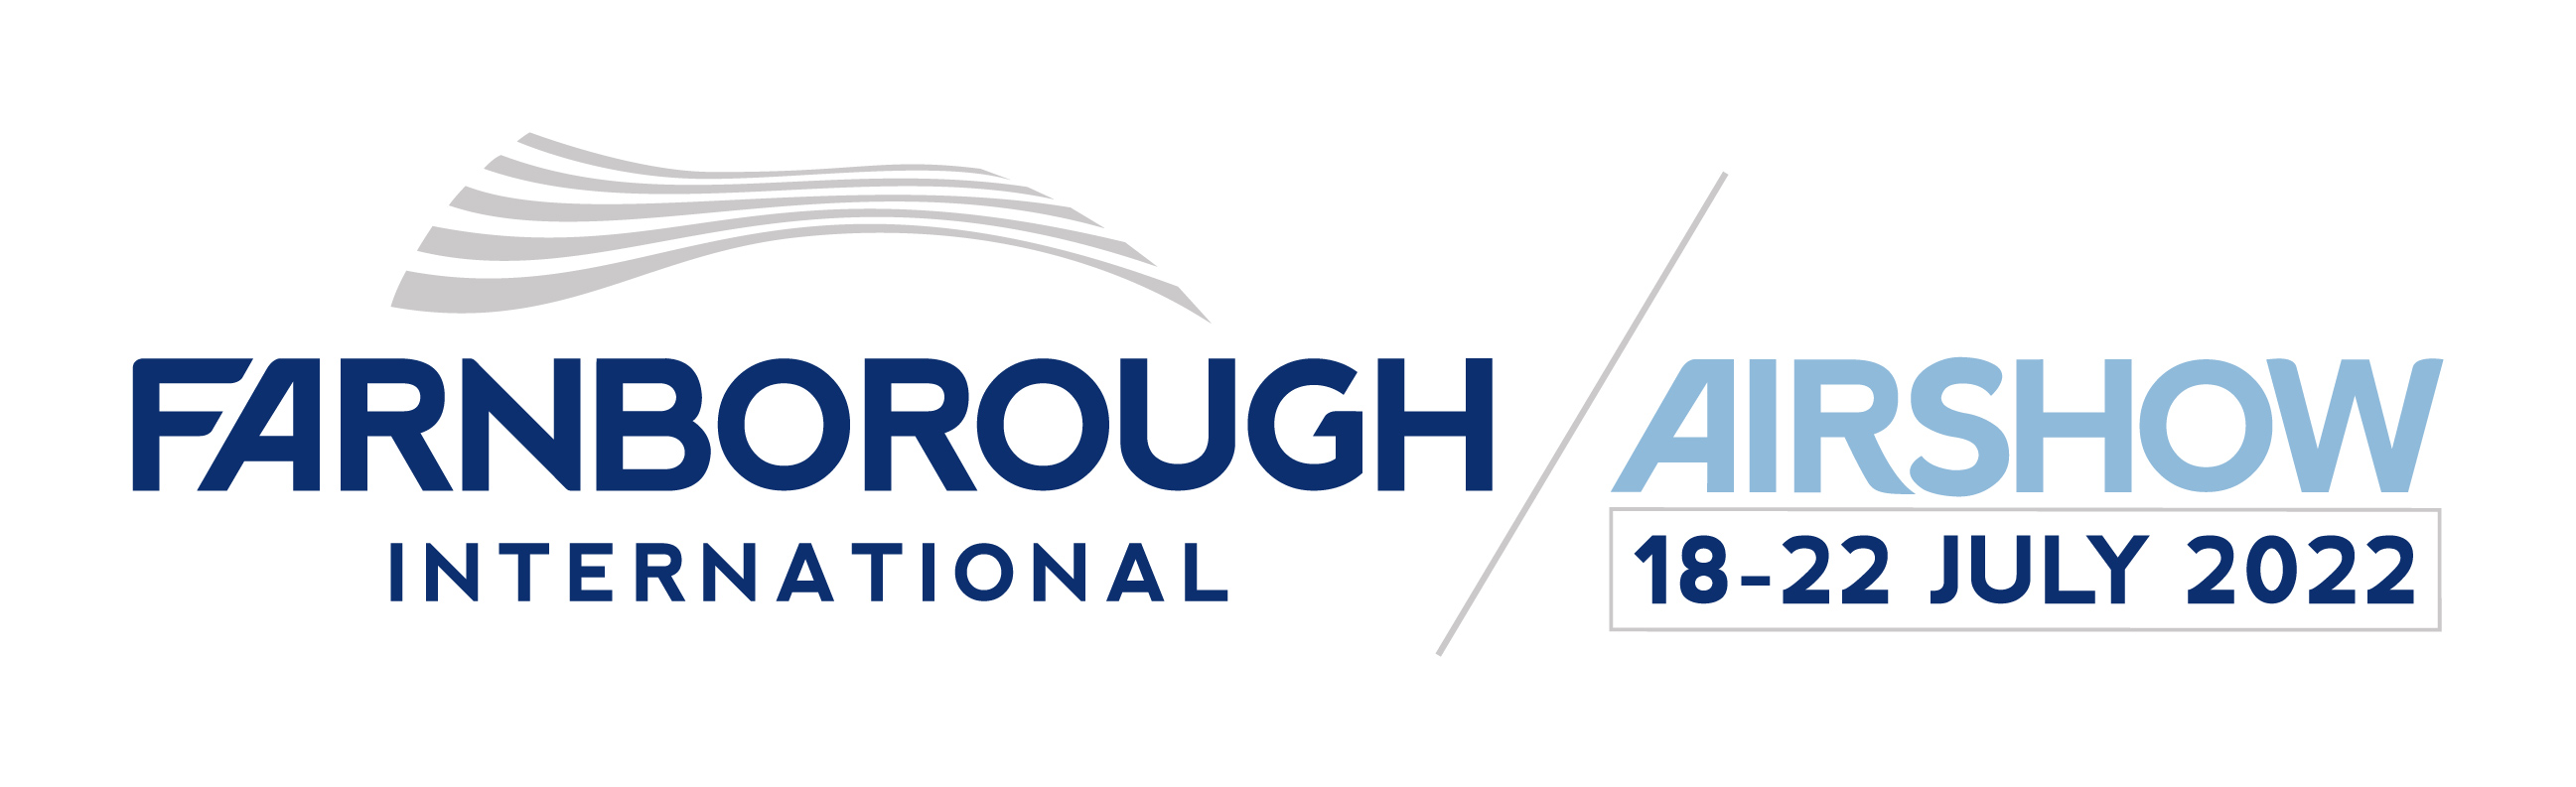 Farnborough International AirShow 2022 Logo